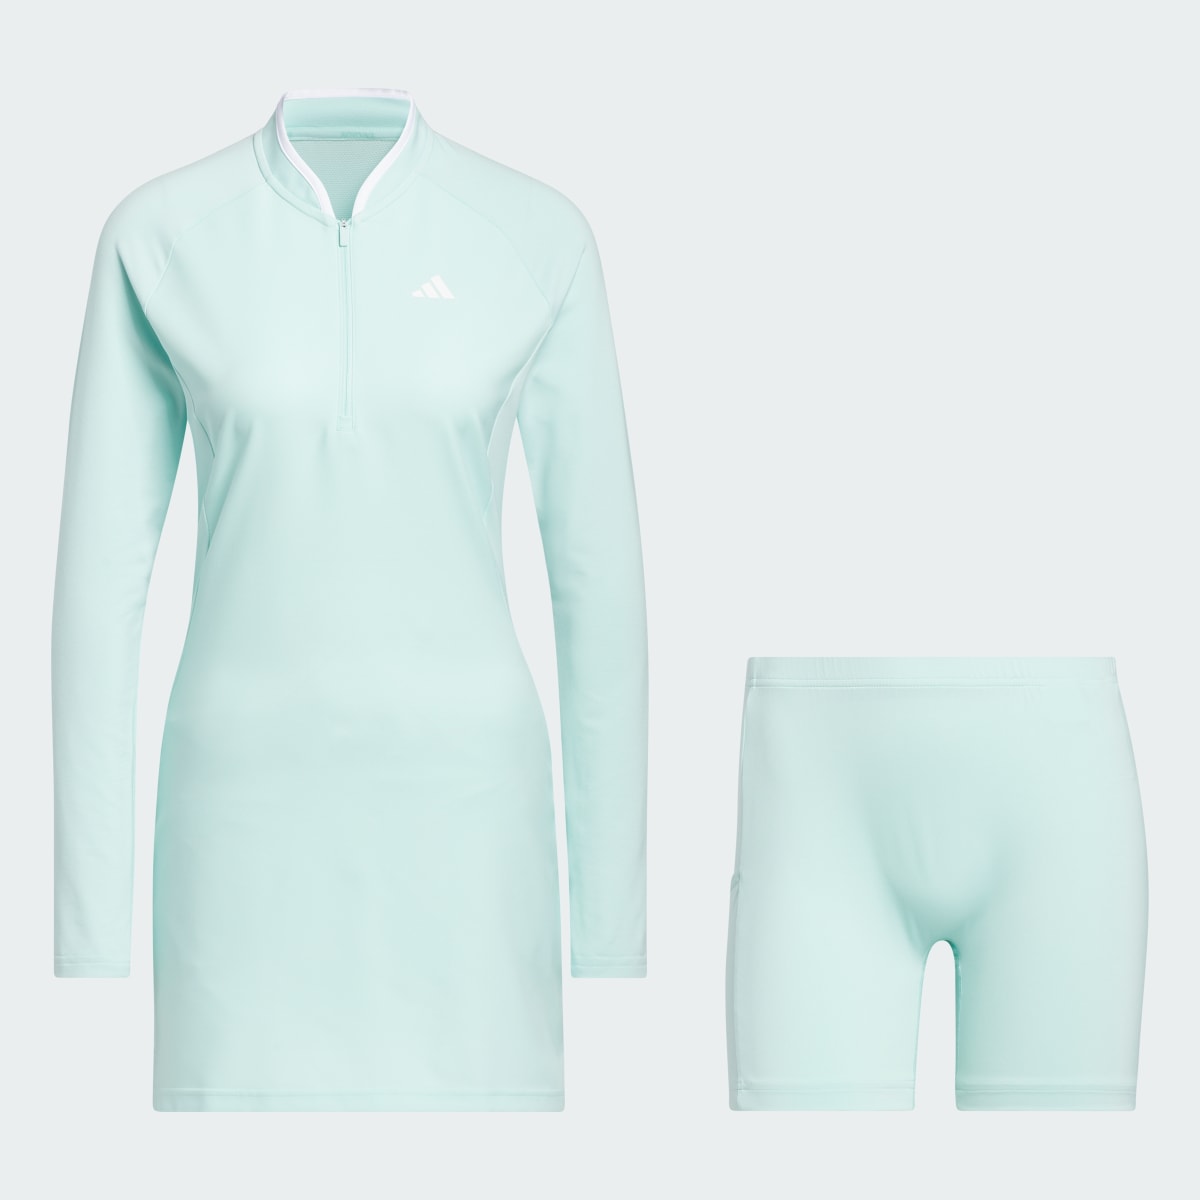 Adidas Long Sleeve Golf Dress. 5